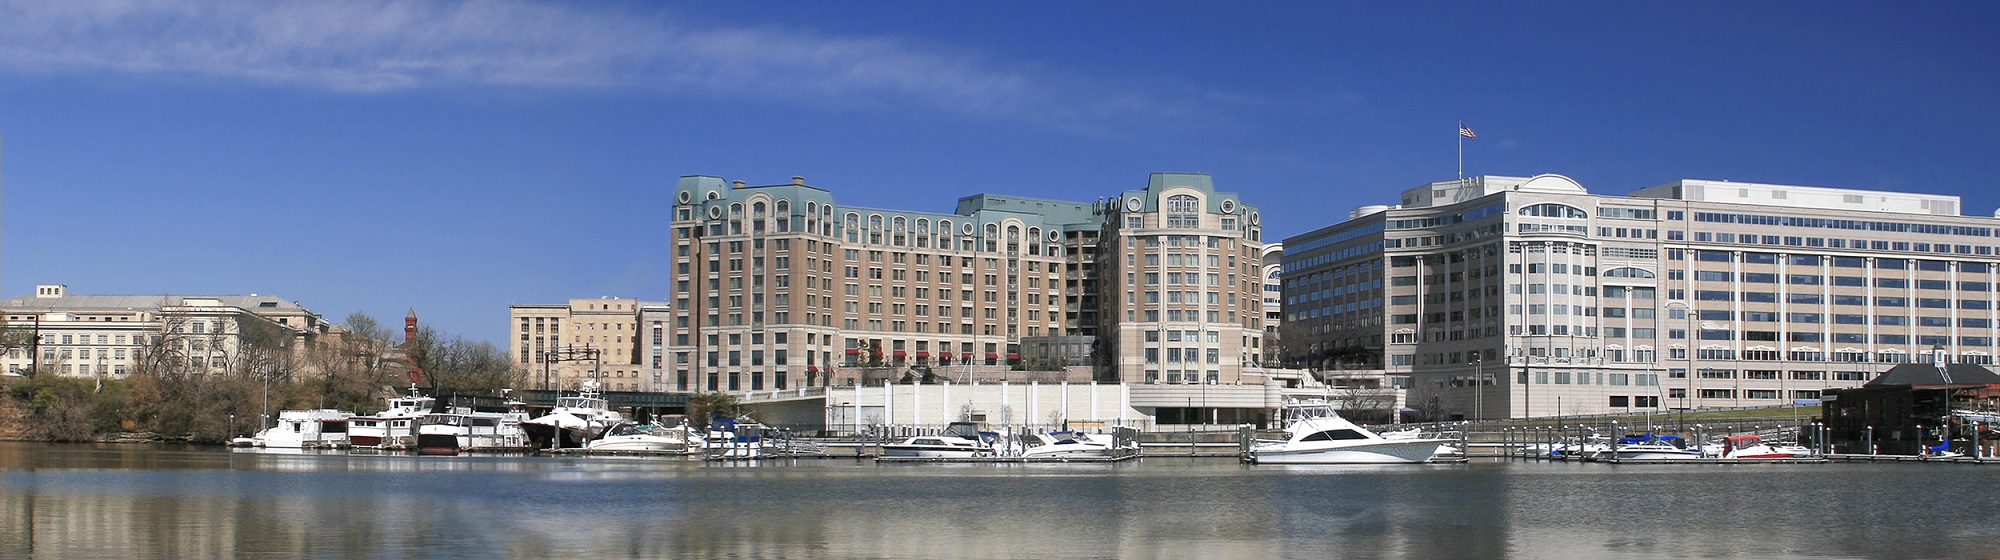 Panoramic shot of the wharf